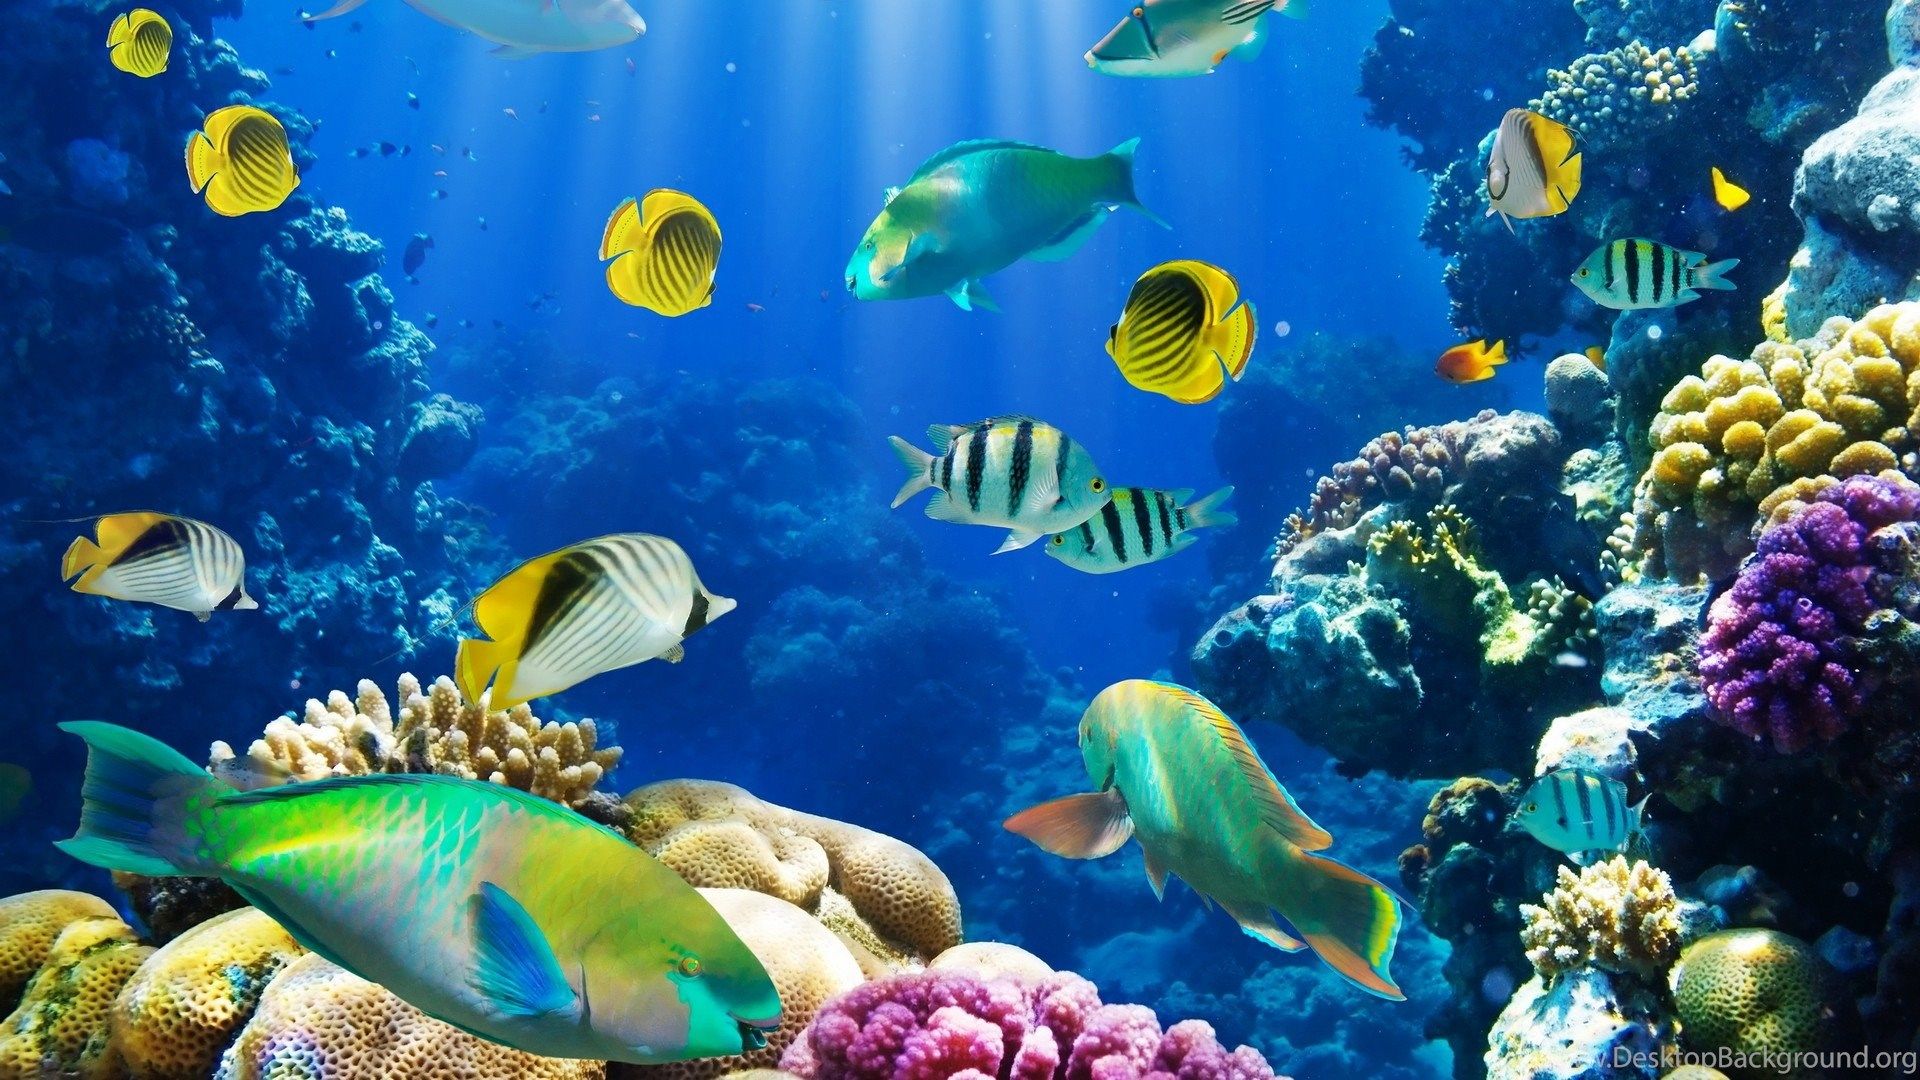 Aquarium screensaver mac free download cnet